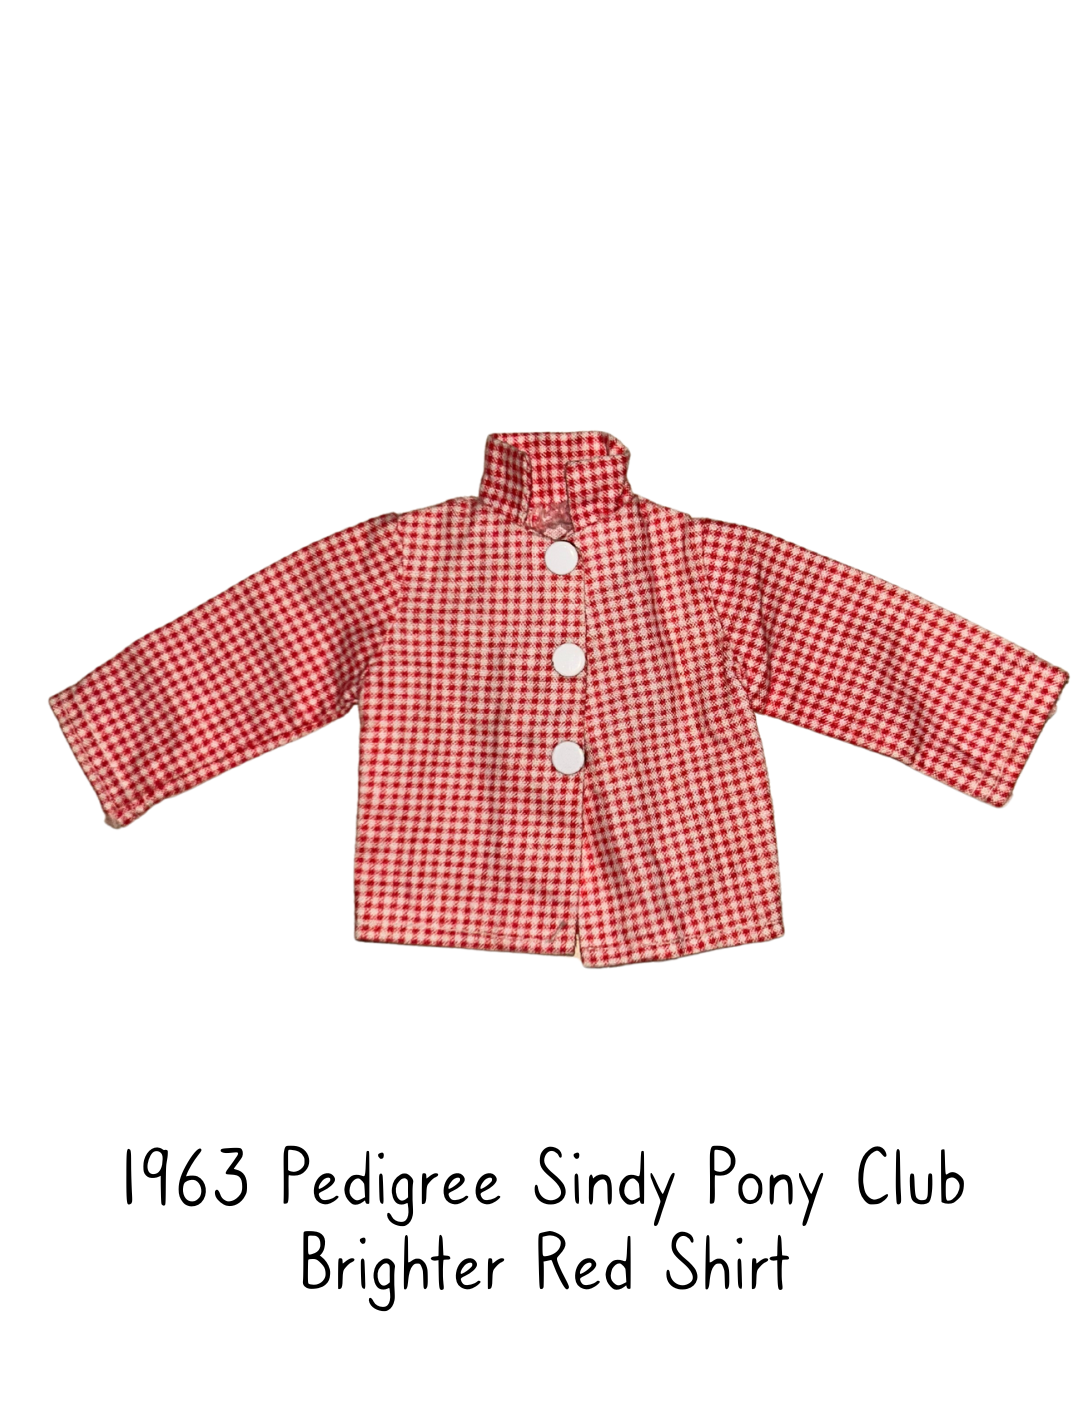 1963 Pedigree Sindy Fashion Doll Pony Club Brighter Red Shirt